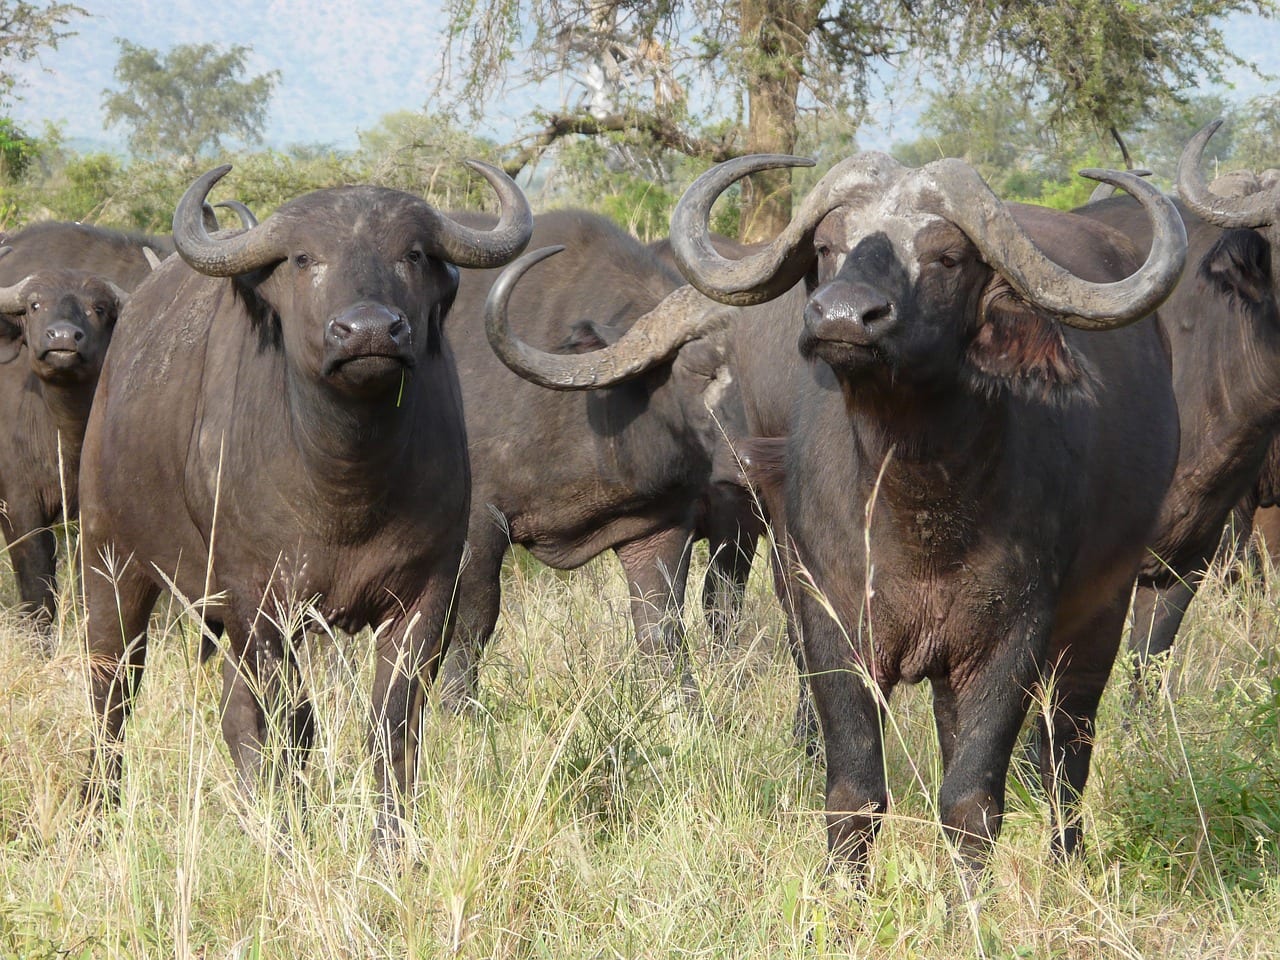 https://pixabay.com/en/cape-buffalo-africa-wildlife-nature-2074923/